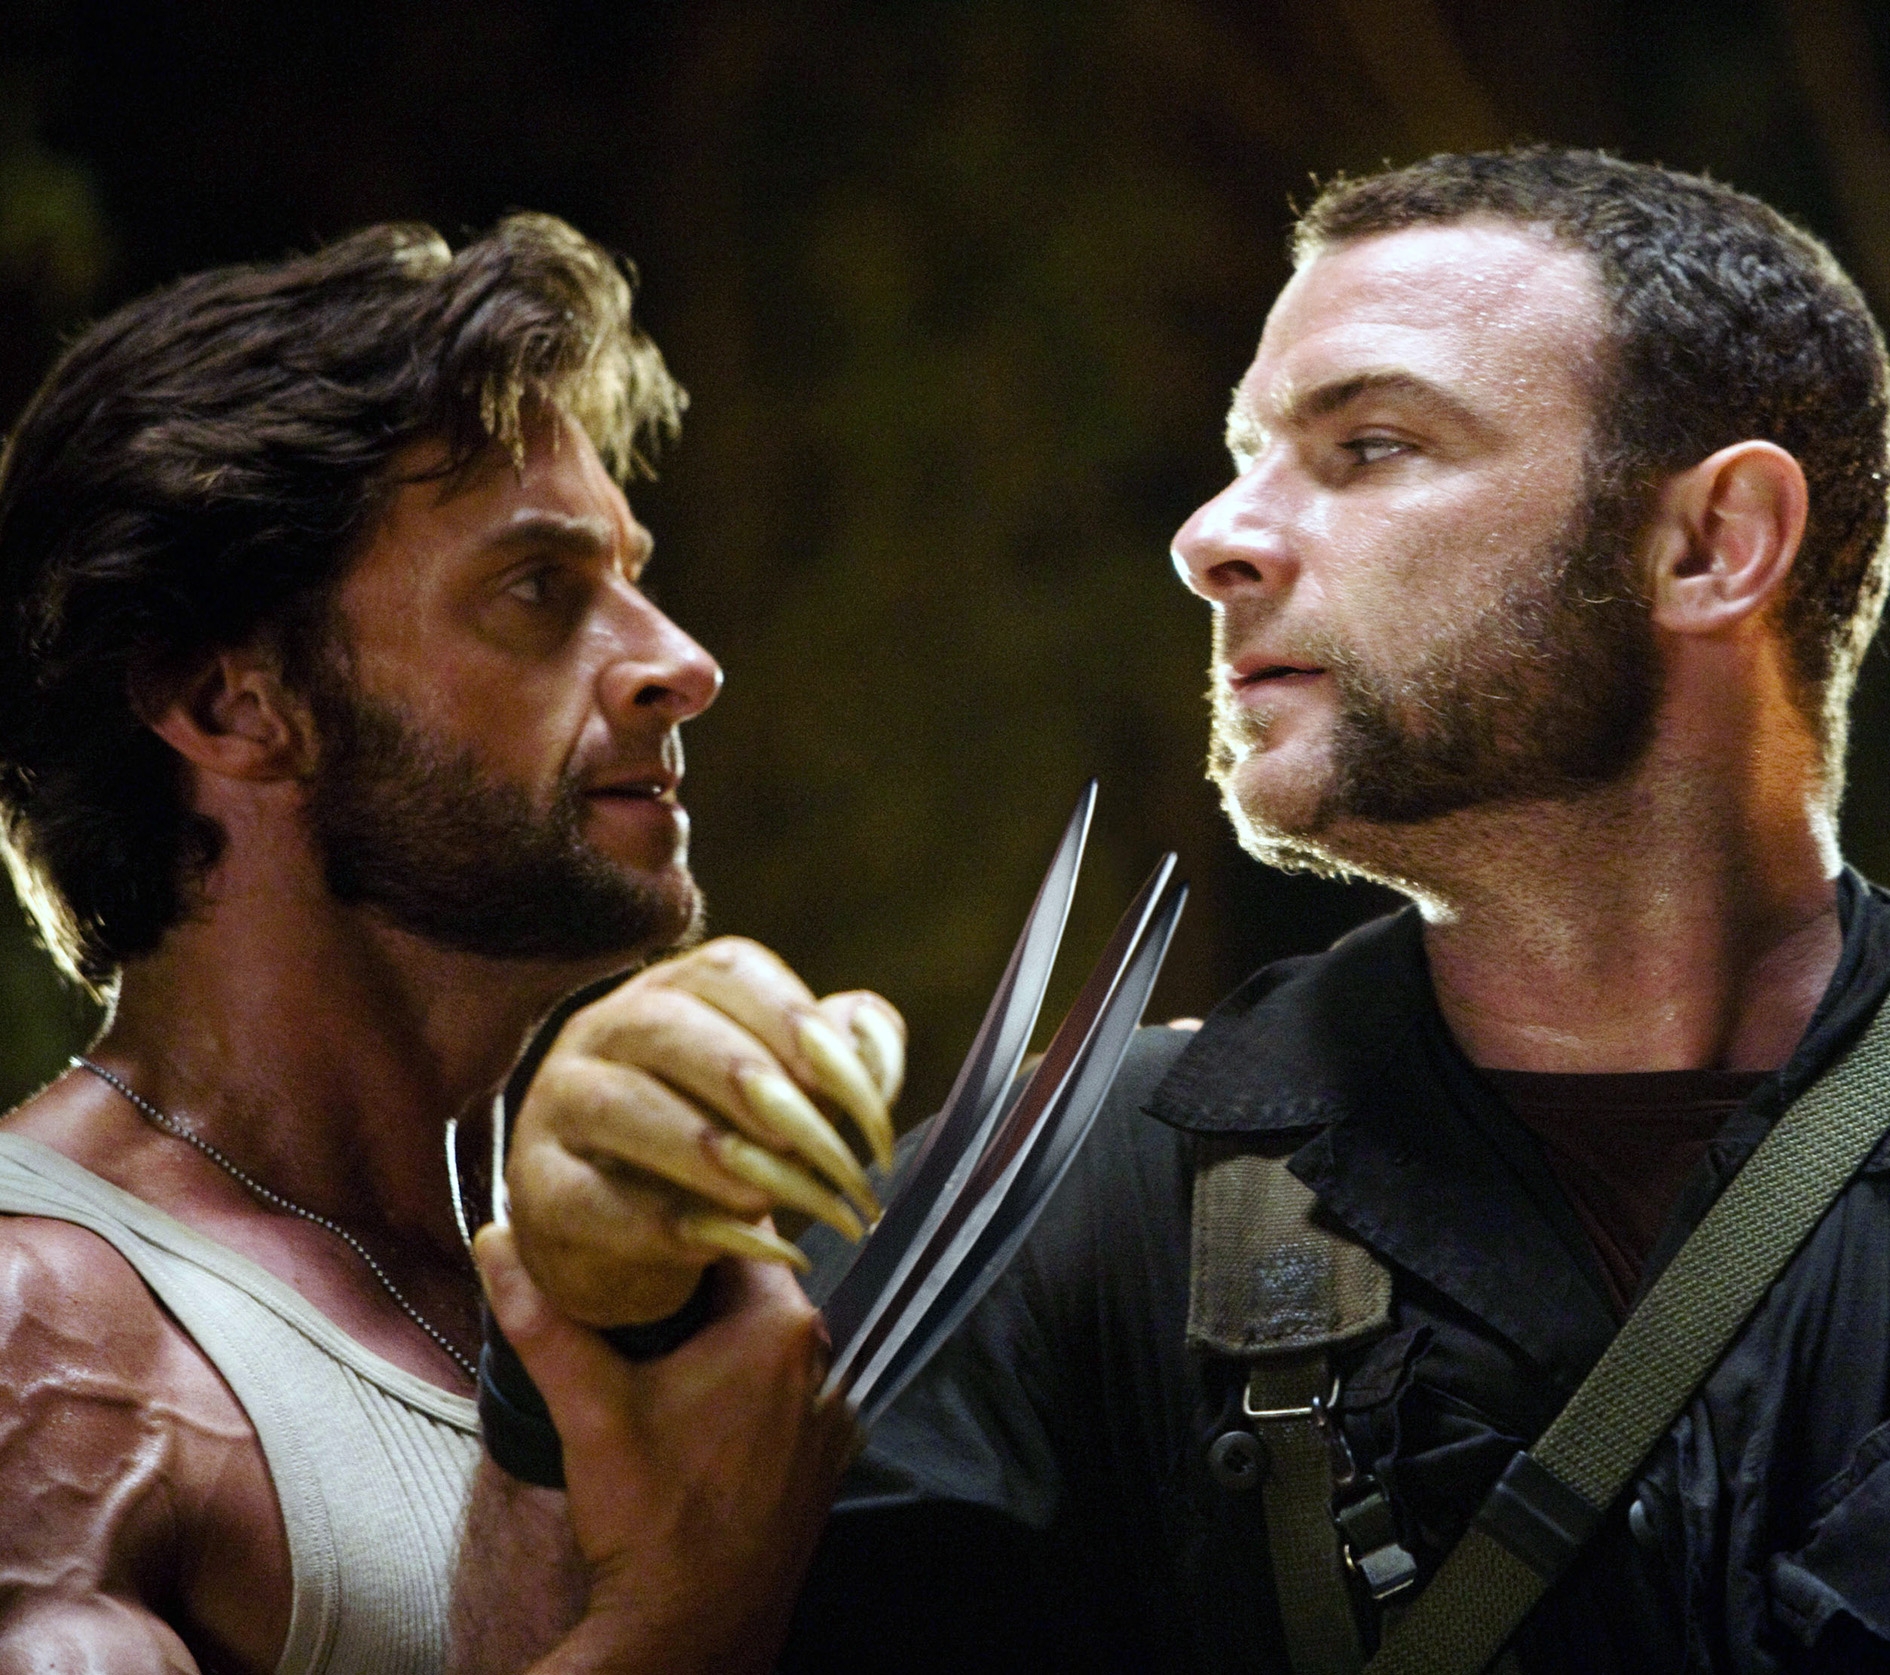 Image du film X-Men Origins : Wolverine 8e956a51-fc10-466b-bb24-cef79fc54bf9